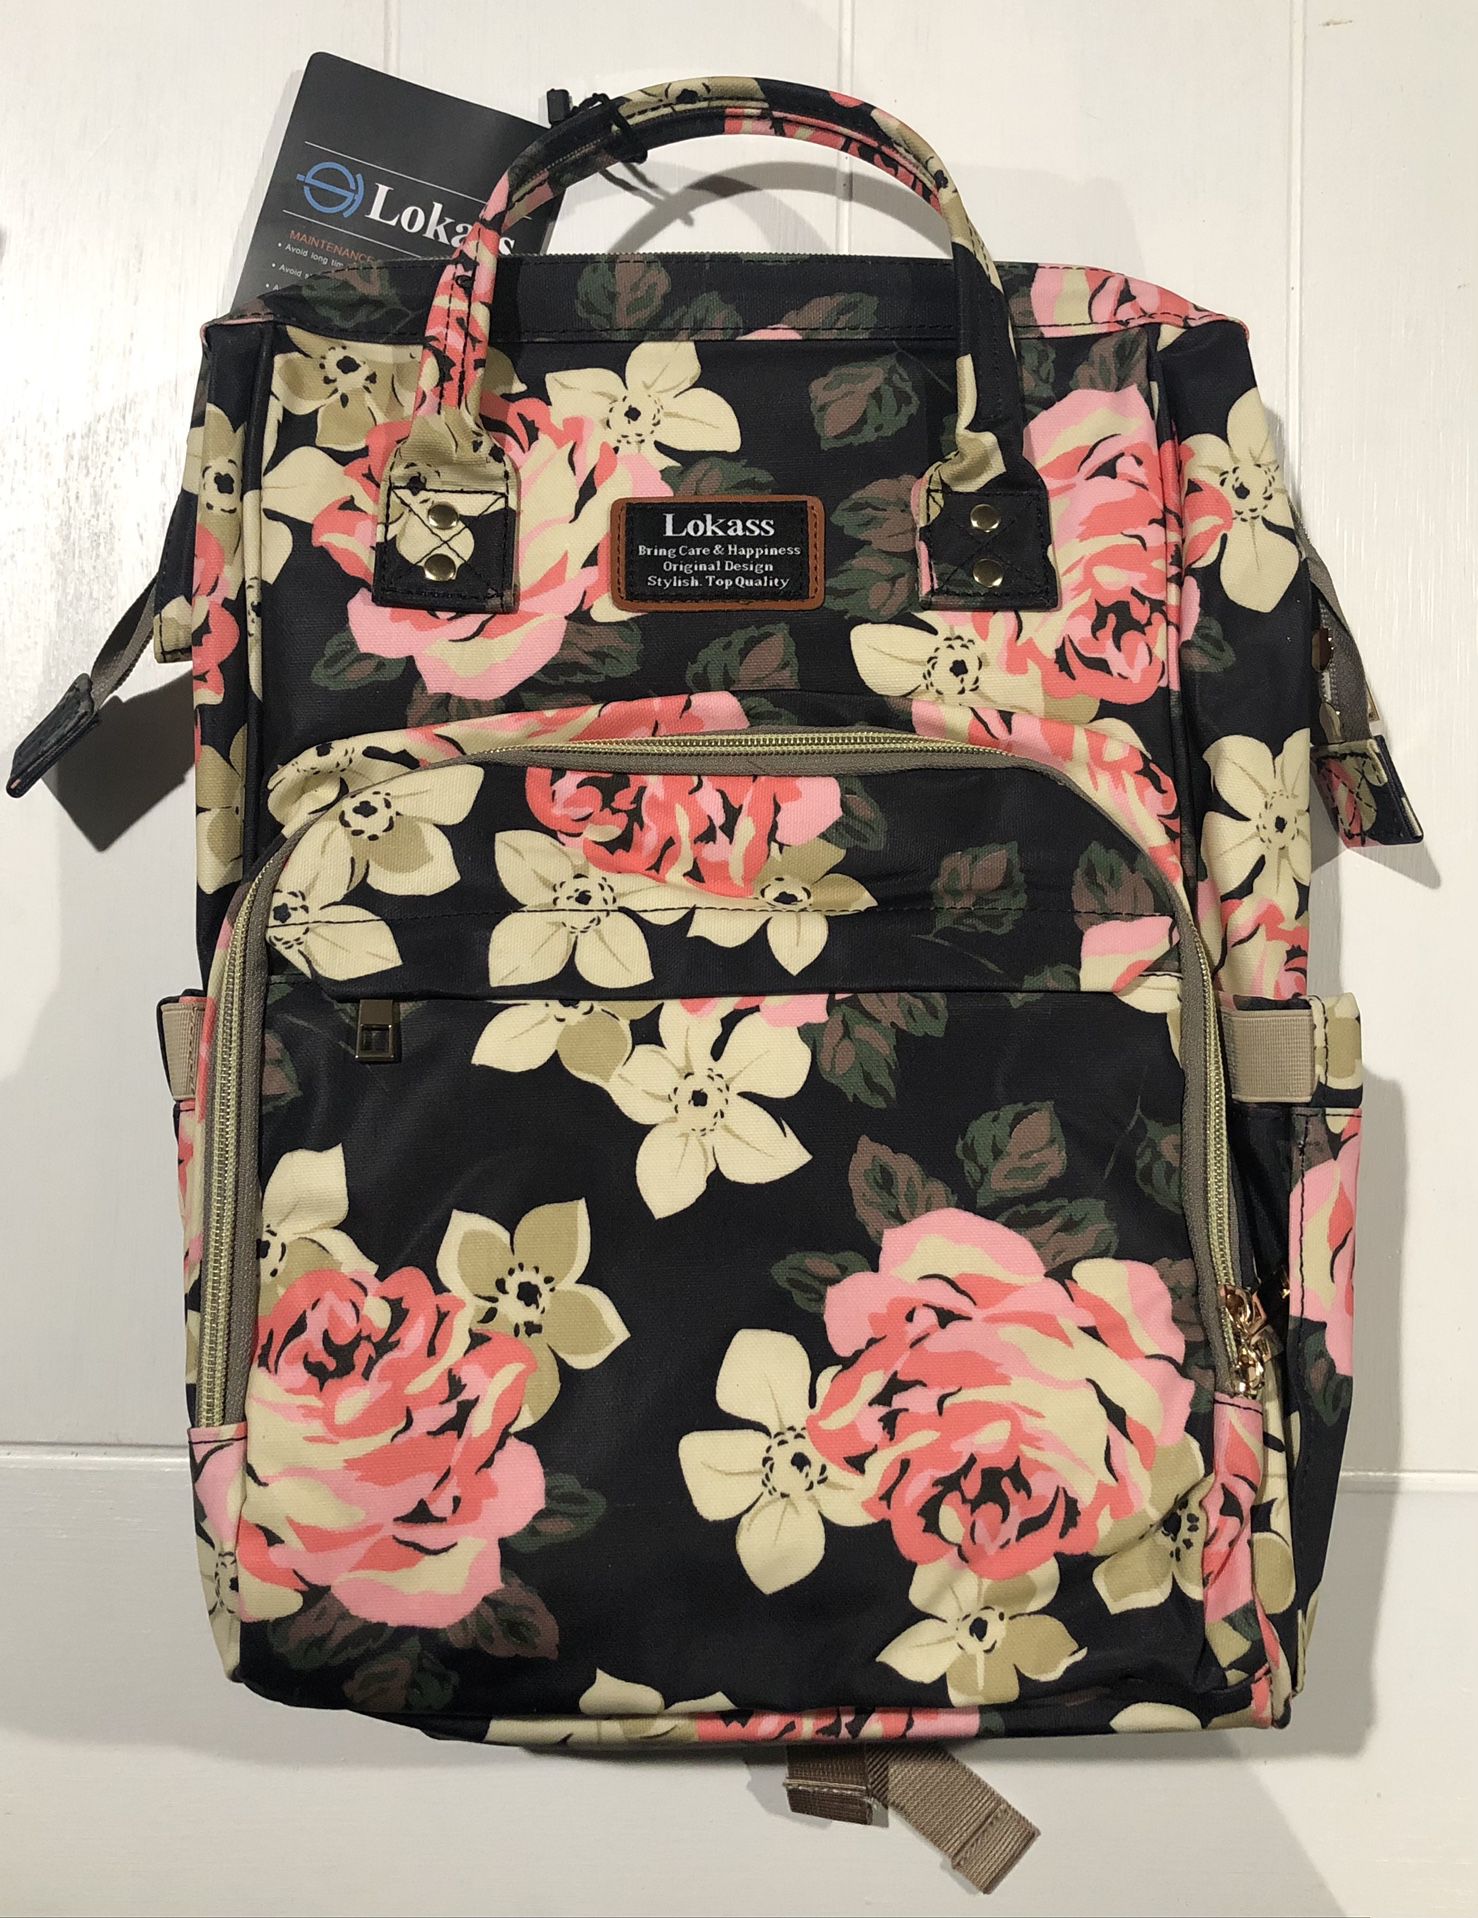 NWT Lokass Diaper Bag/Backpack Flower Pattern - $25